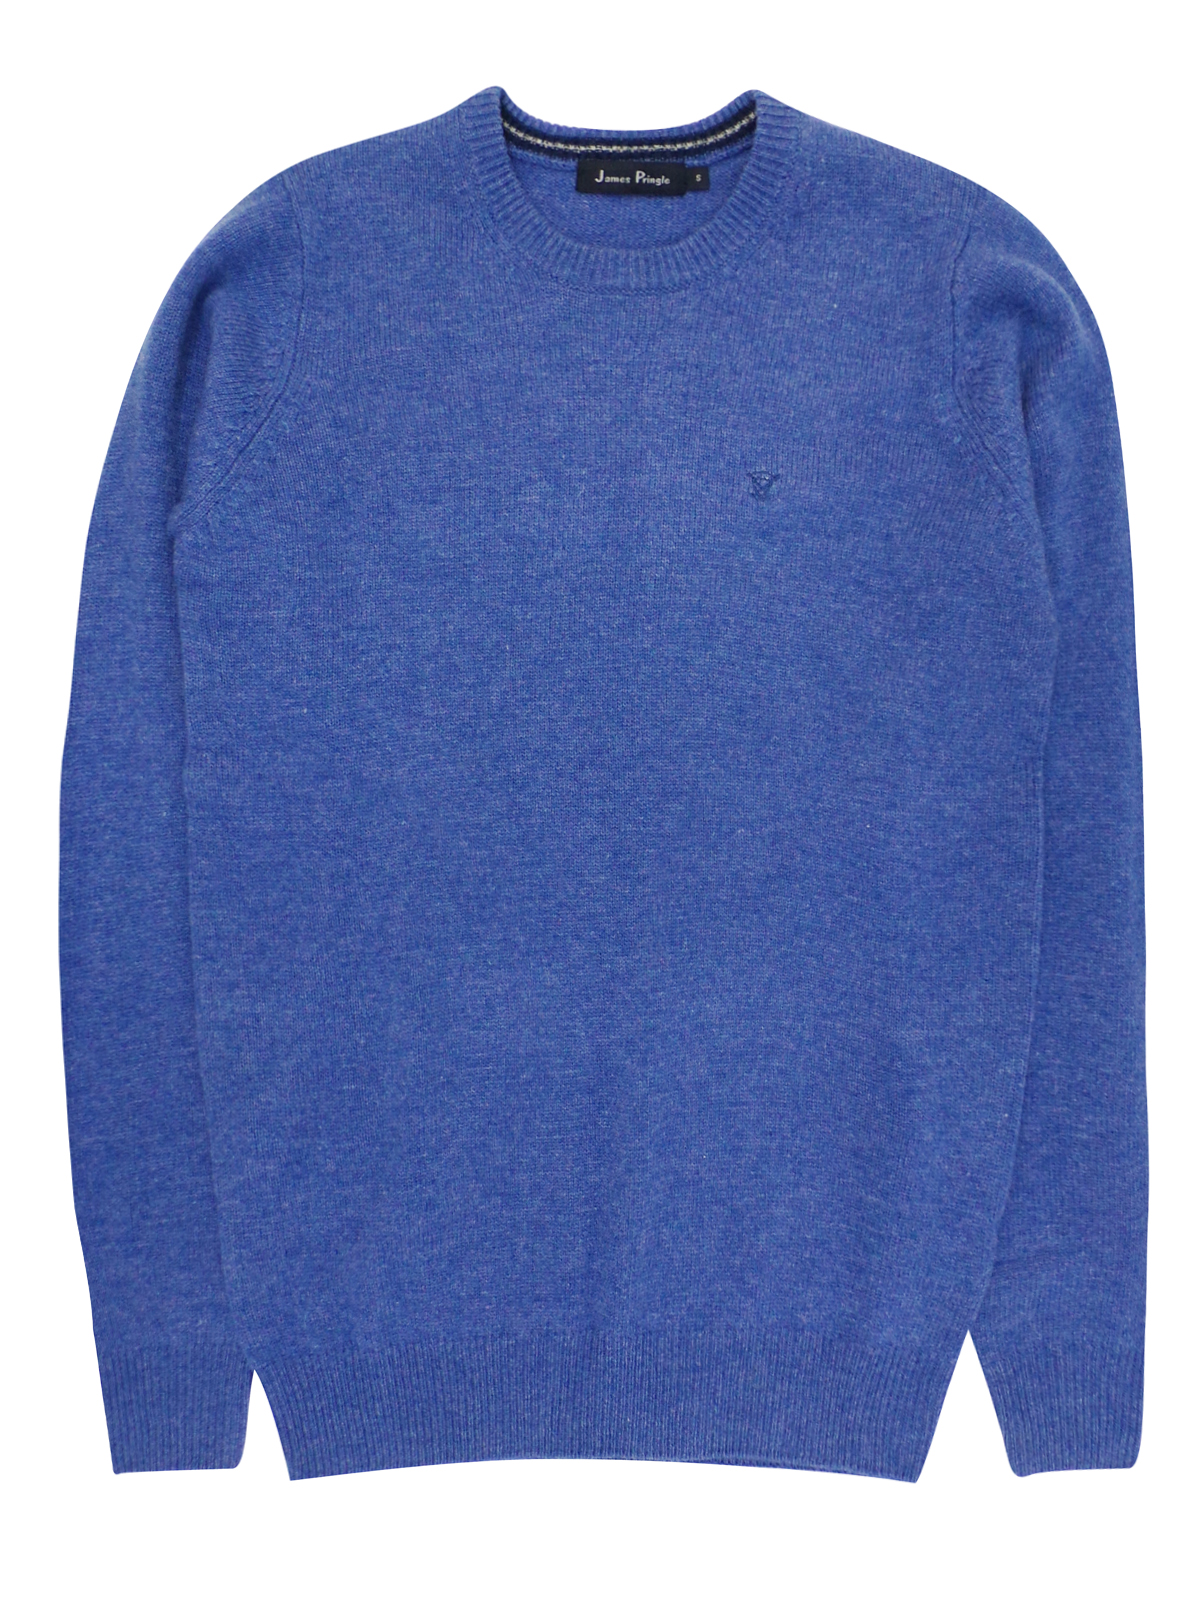 James Pringle - - James Pringle LIGHT-BLUE Pure Wool Crew Neck Knitted ...